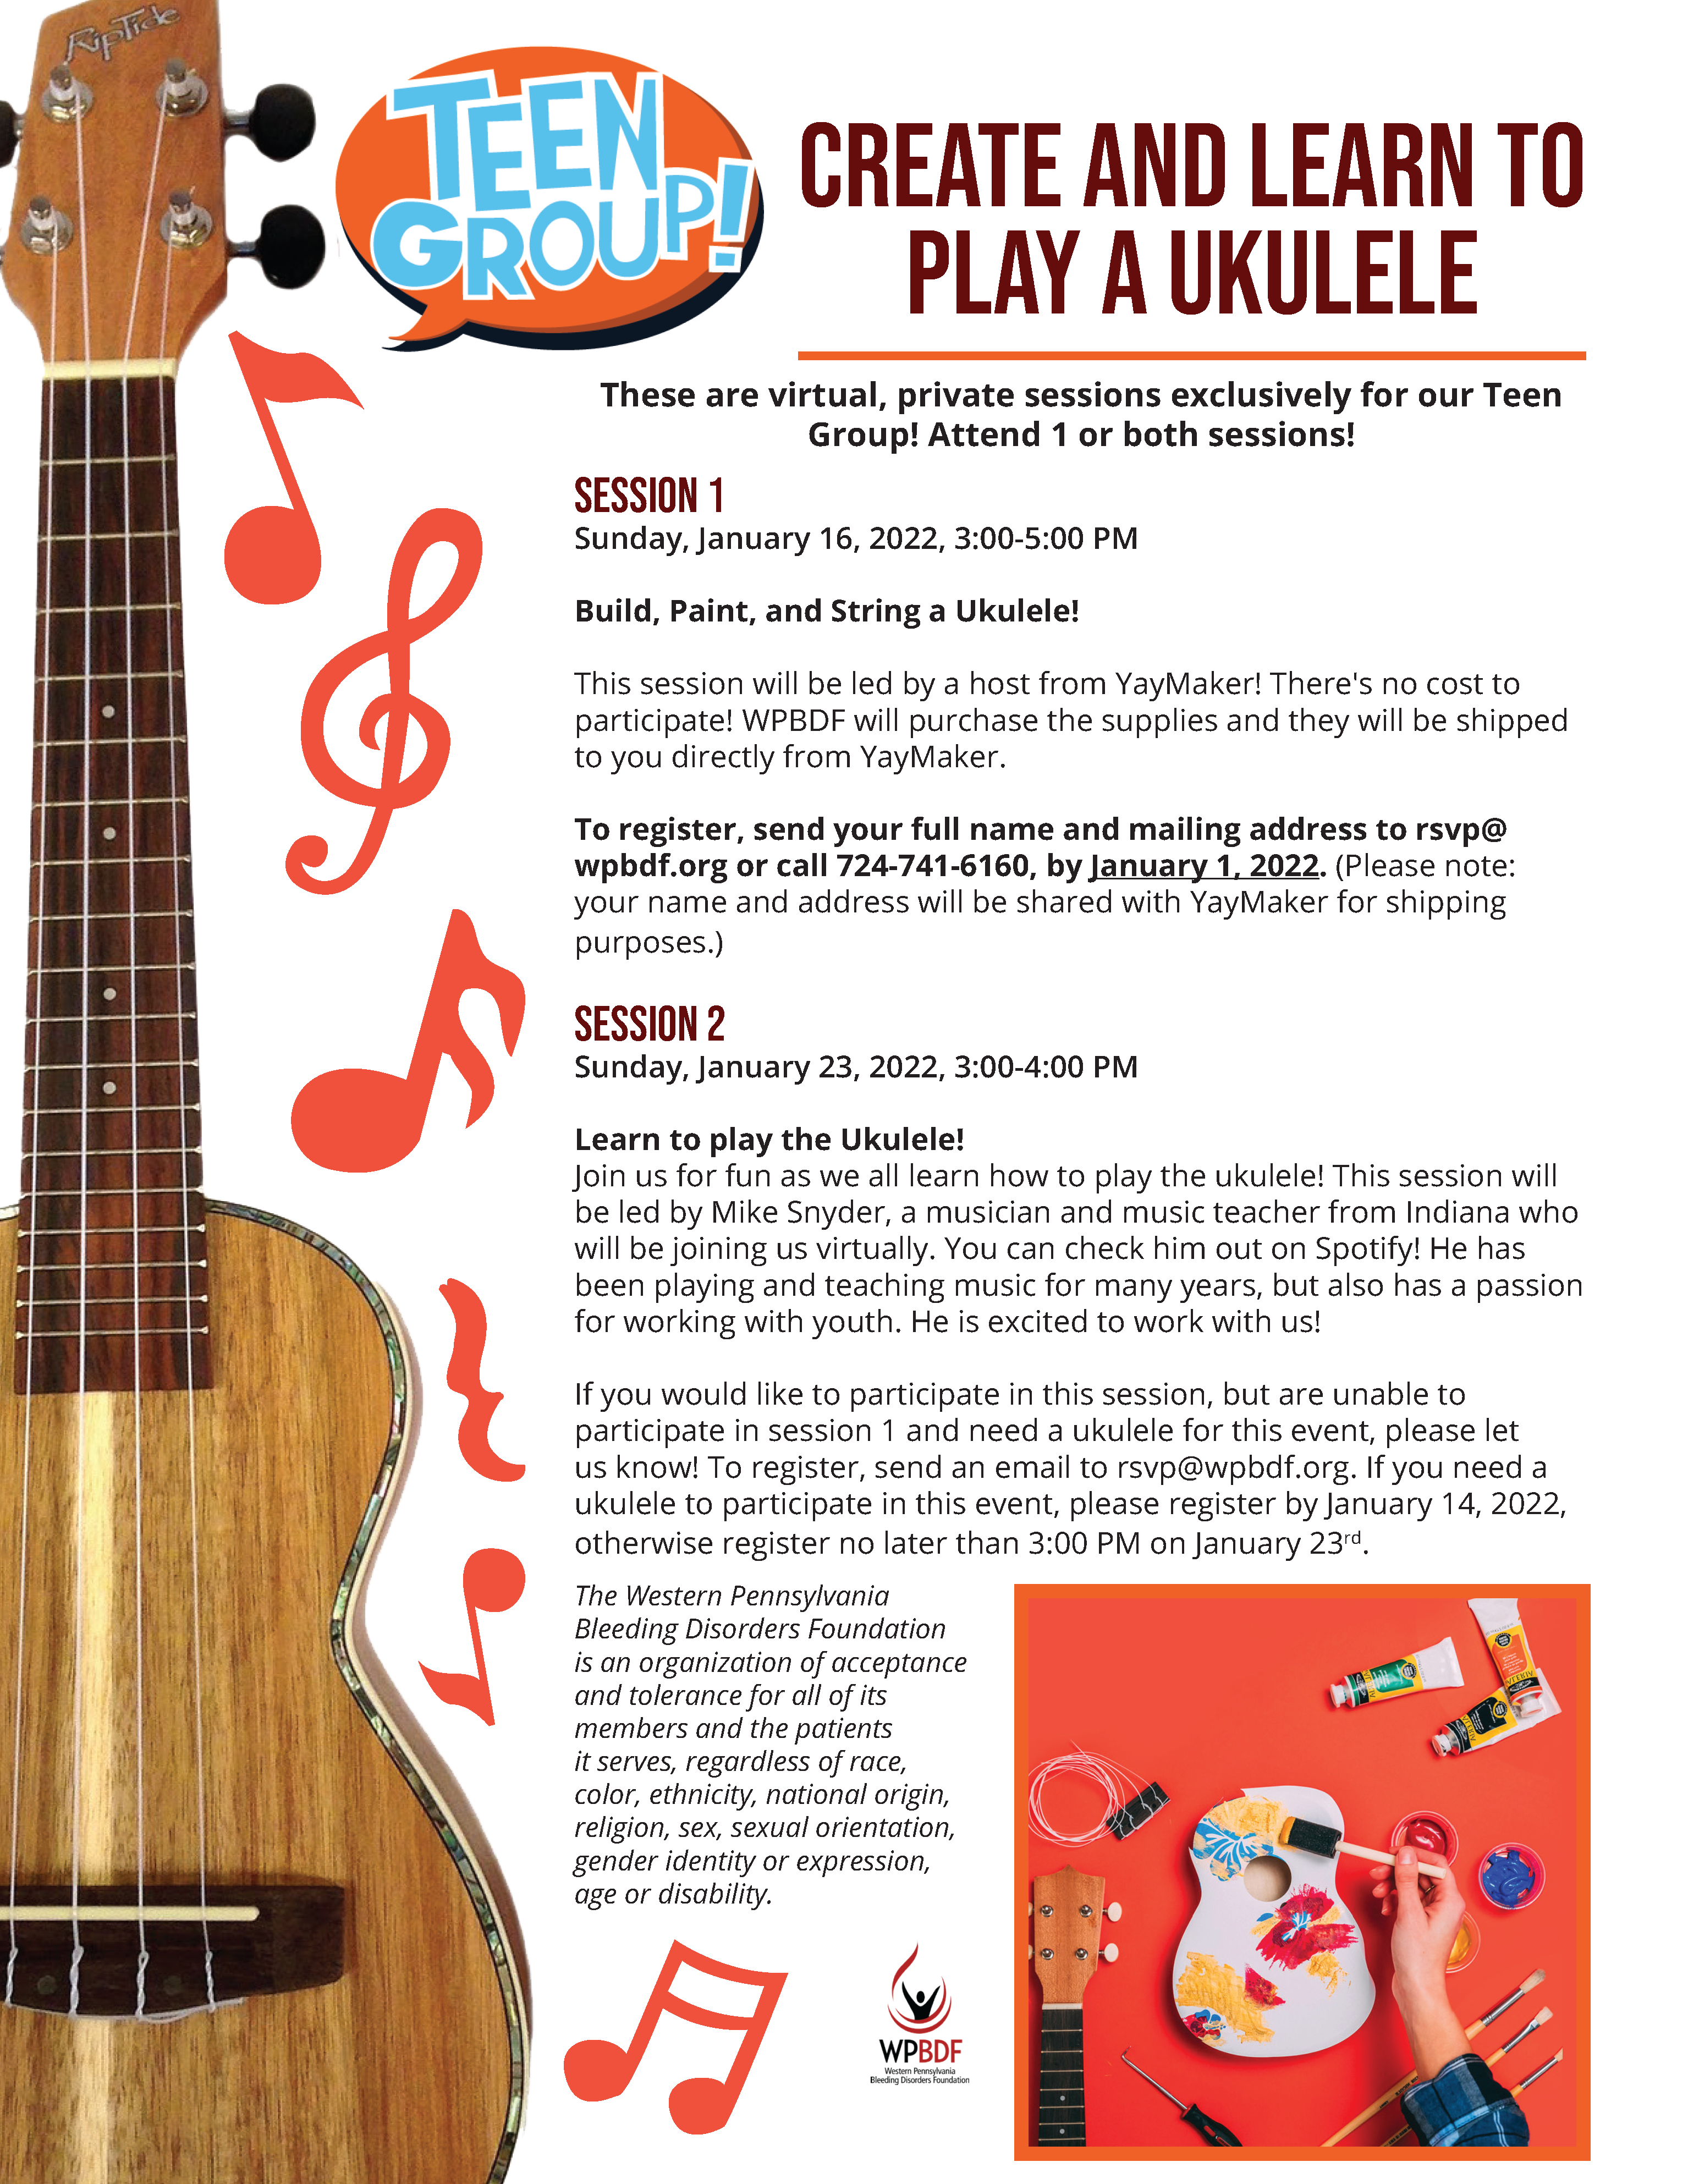 lejlighed ledsager tjene Teen Group Virtual Program: Learn to play the Ukulele!